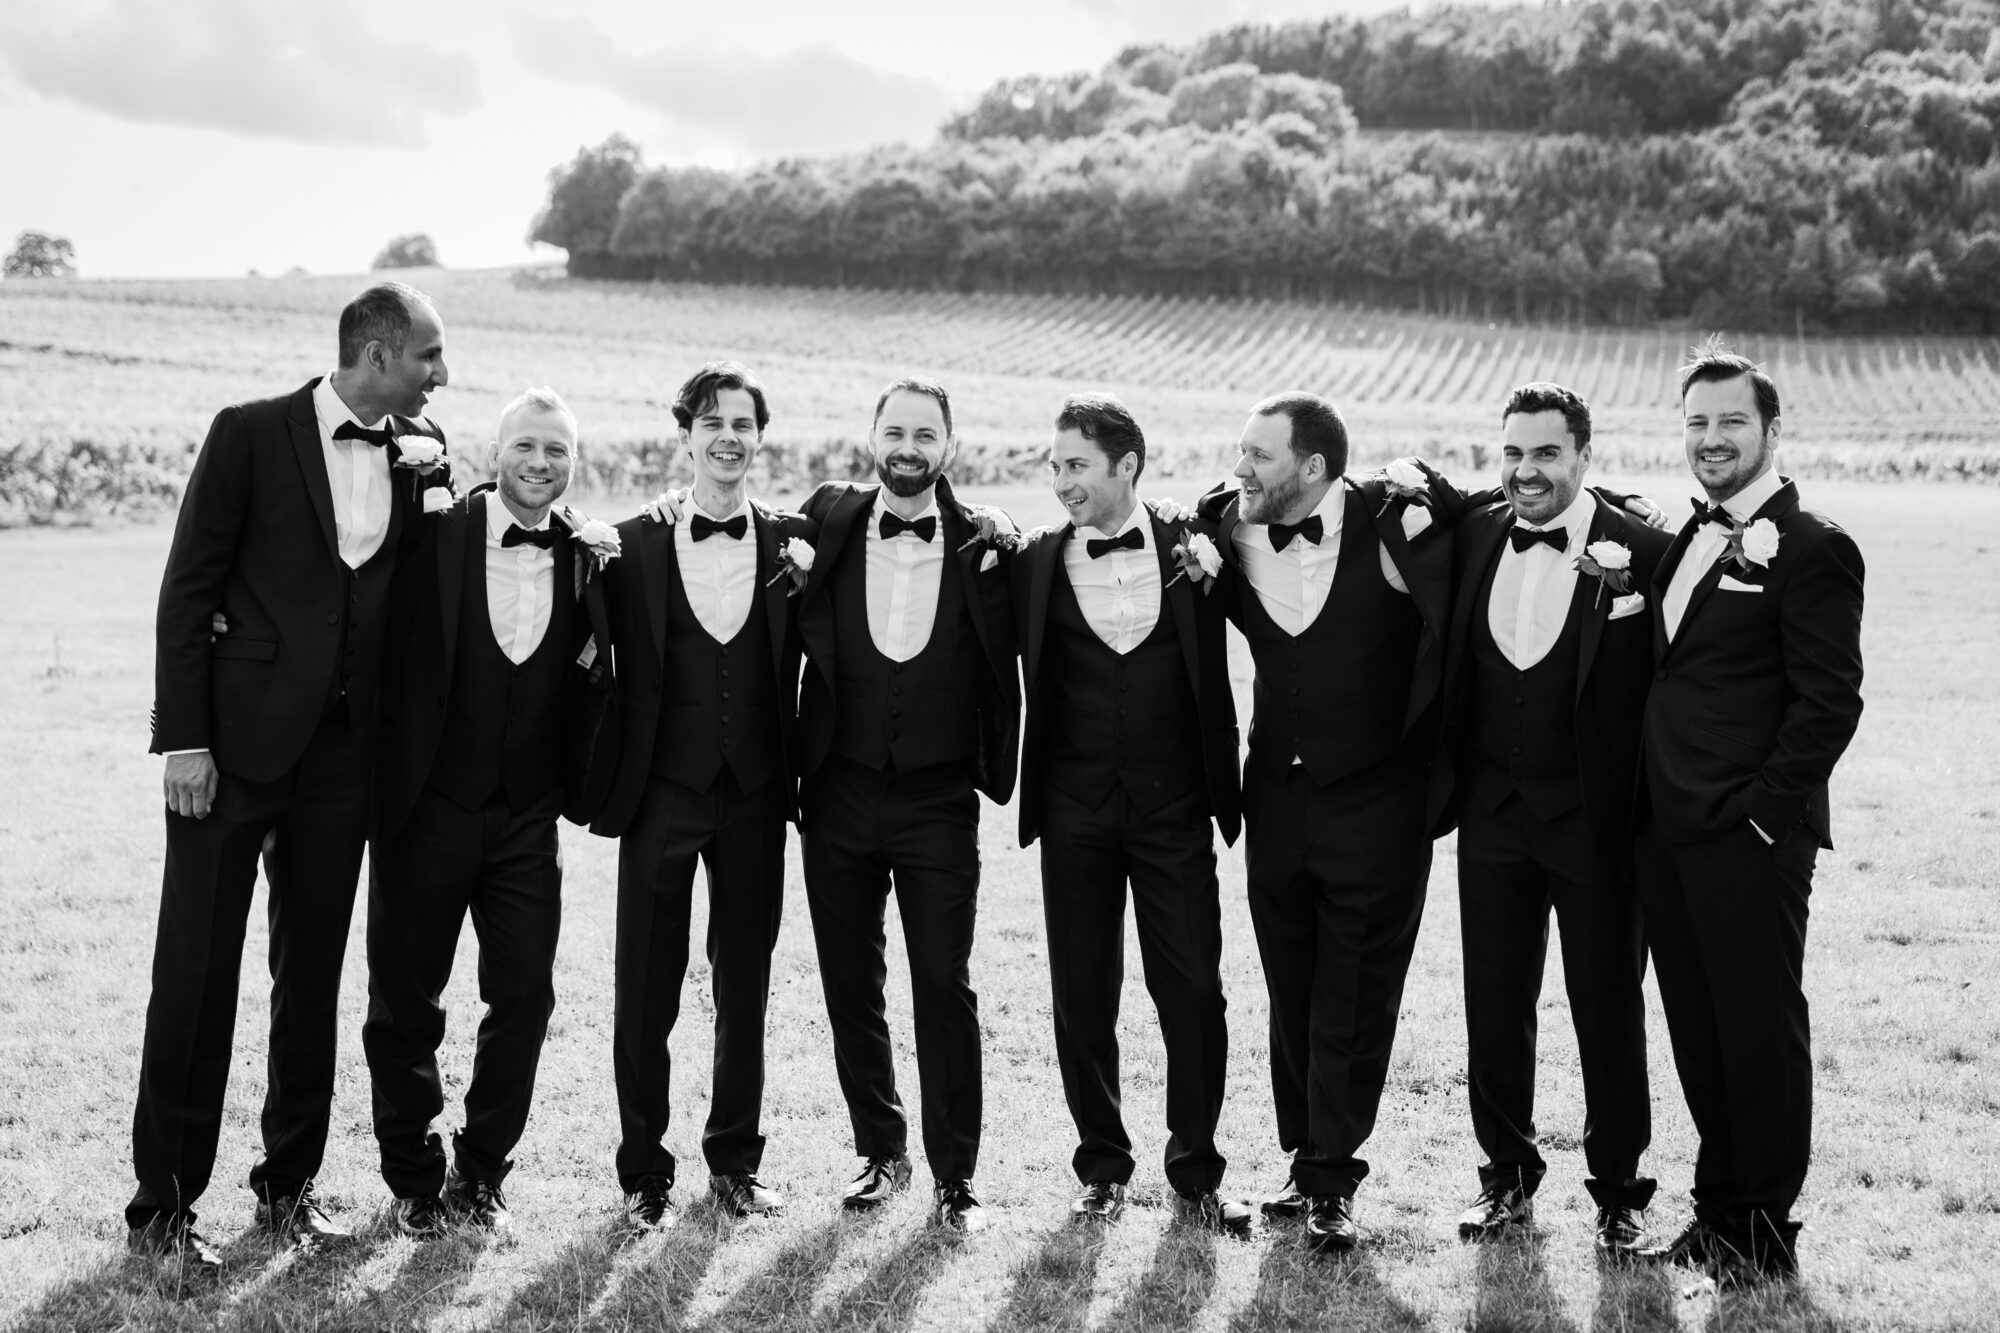 Denbies Summer Wedding groom and groomsmen group photo